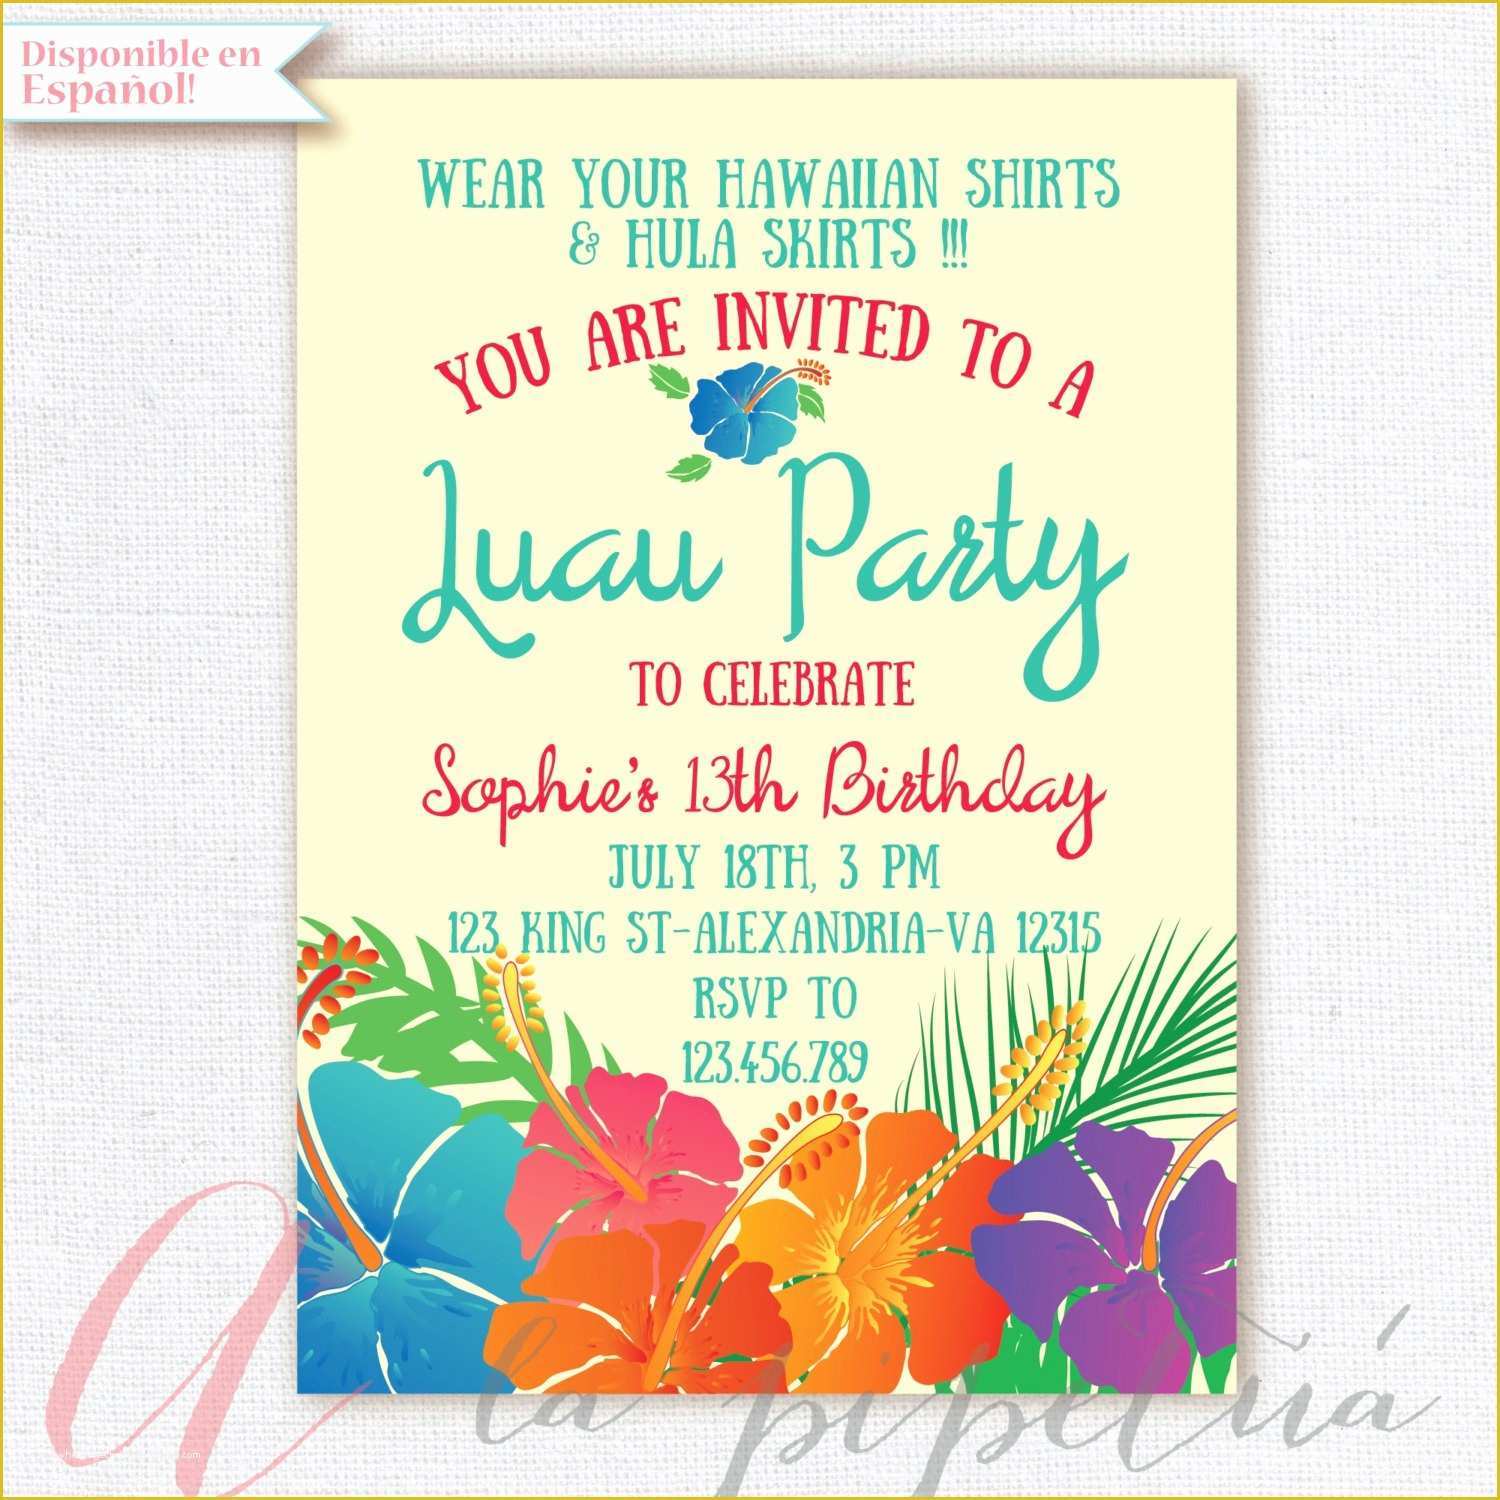 Luau Invitations Templates Free Of Ideas Personalize Your Party Using Luau Invitations Ideas